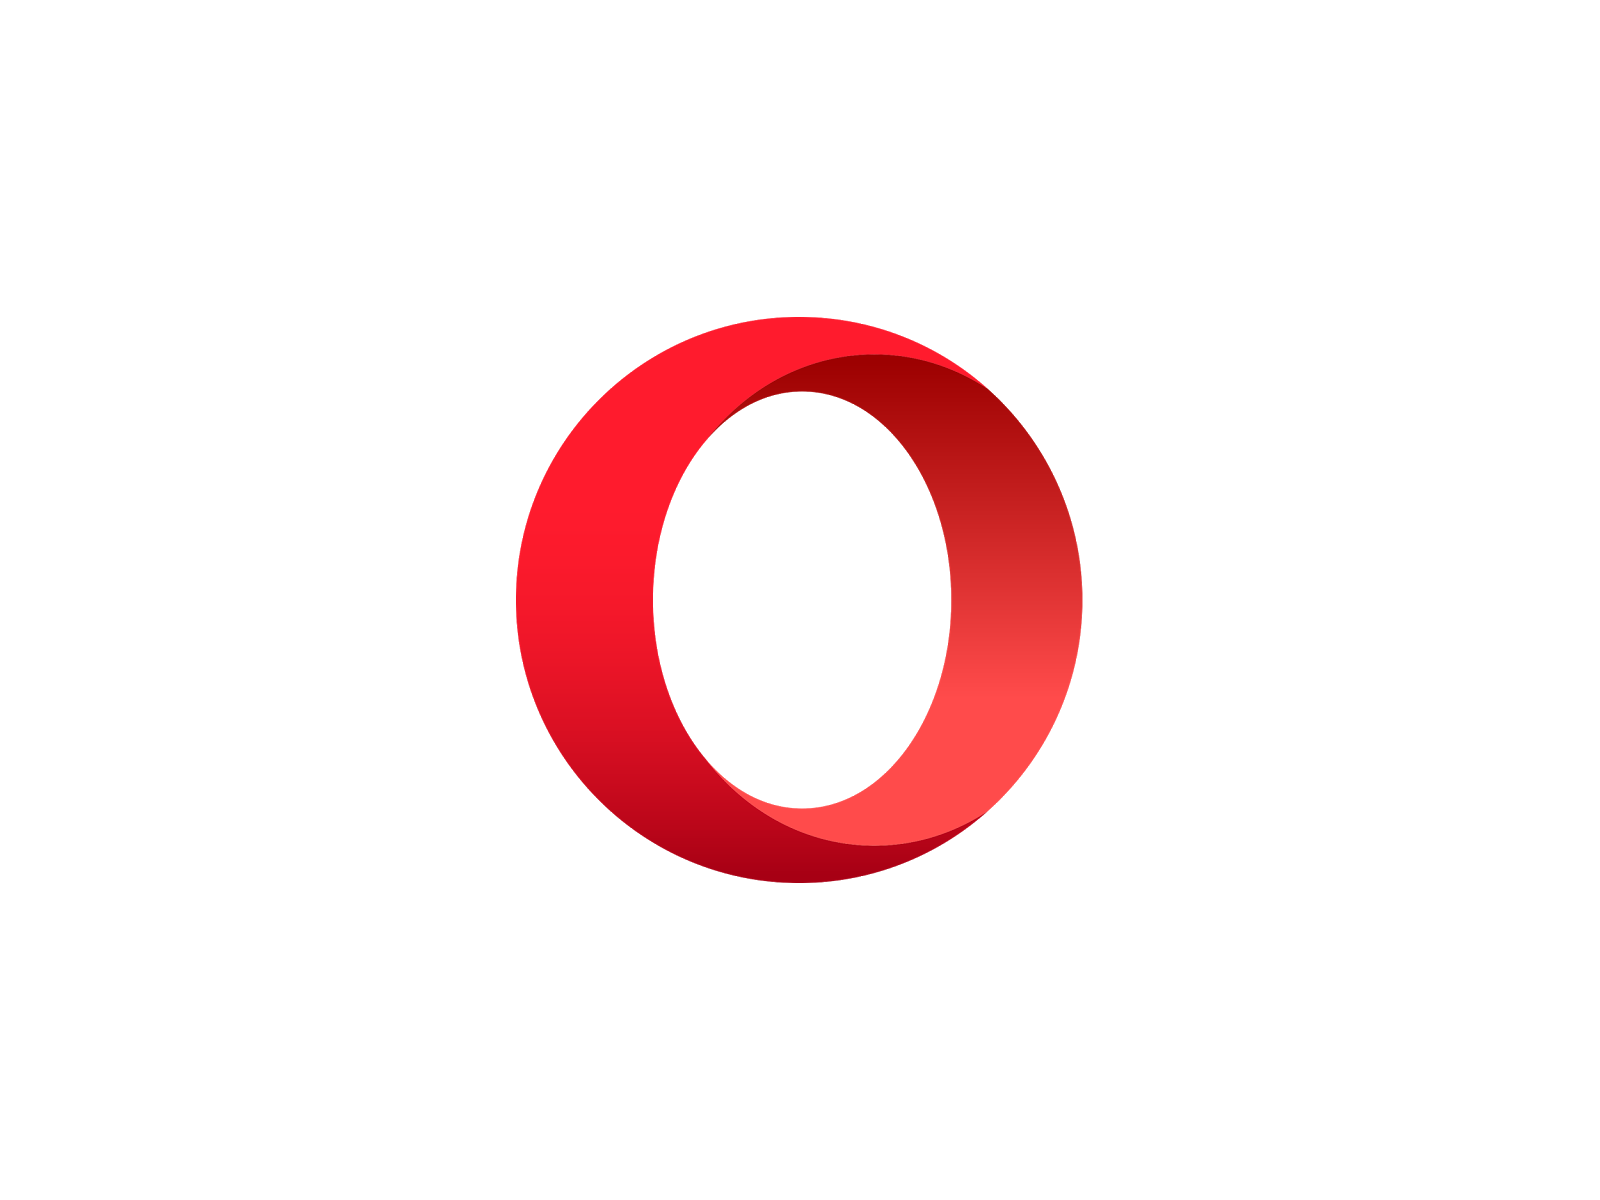 Opera Logo Png - Opera Browse